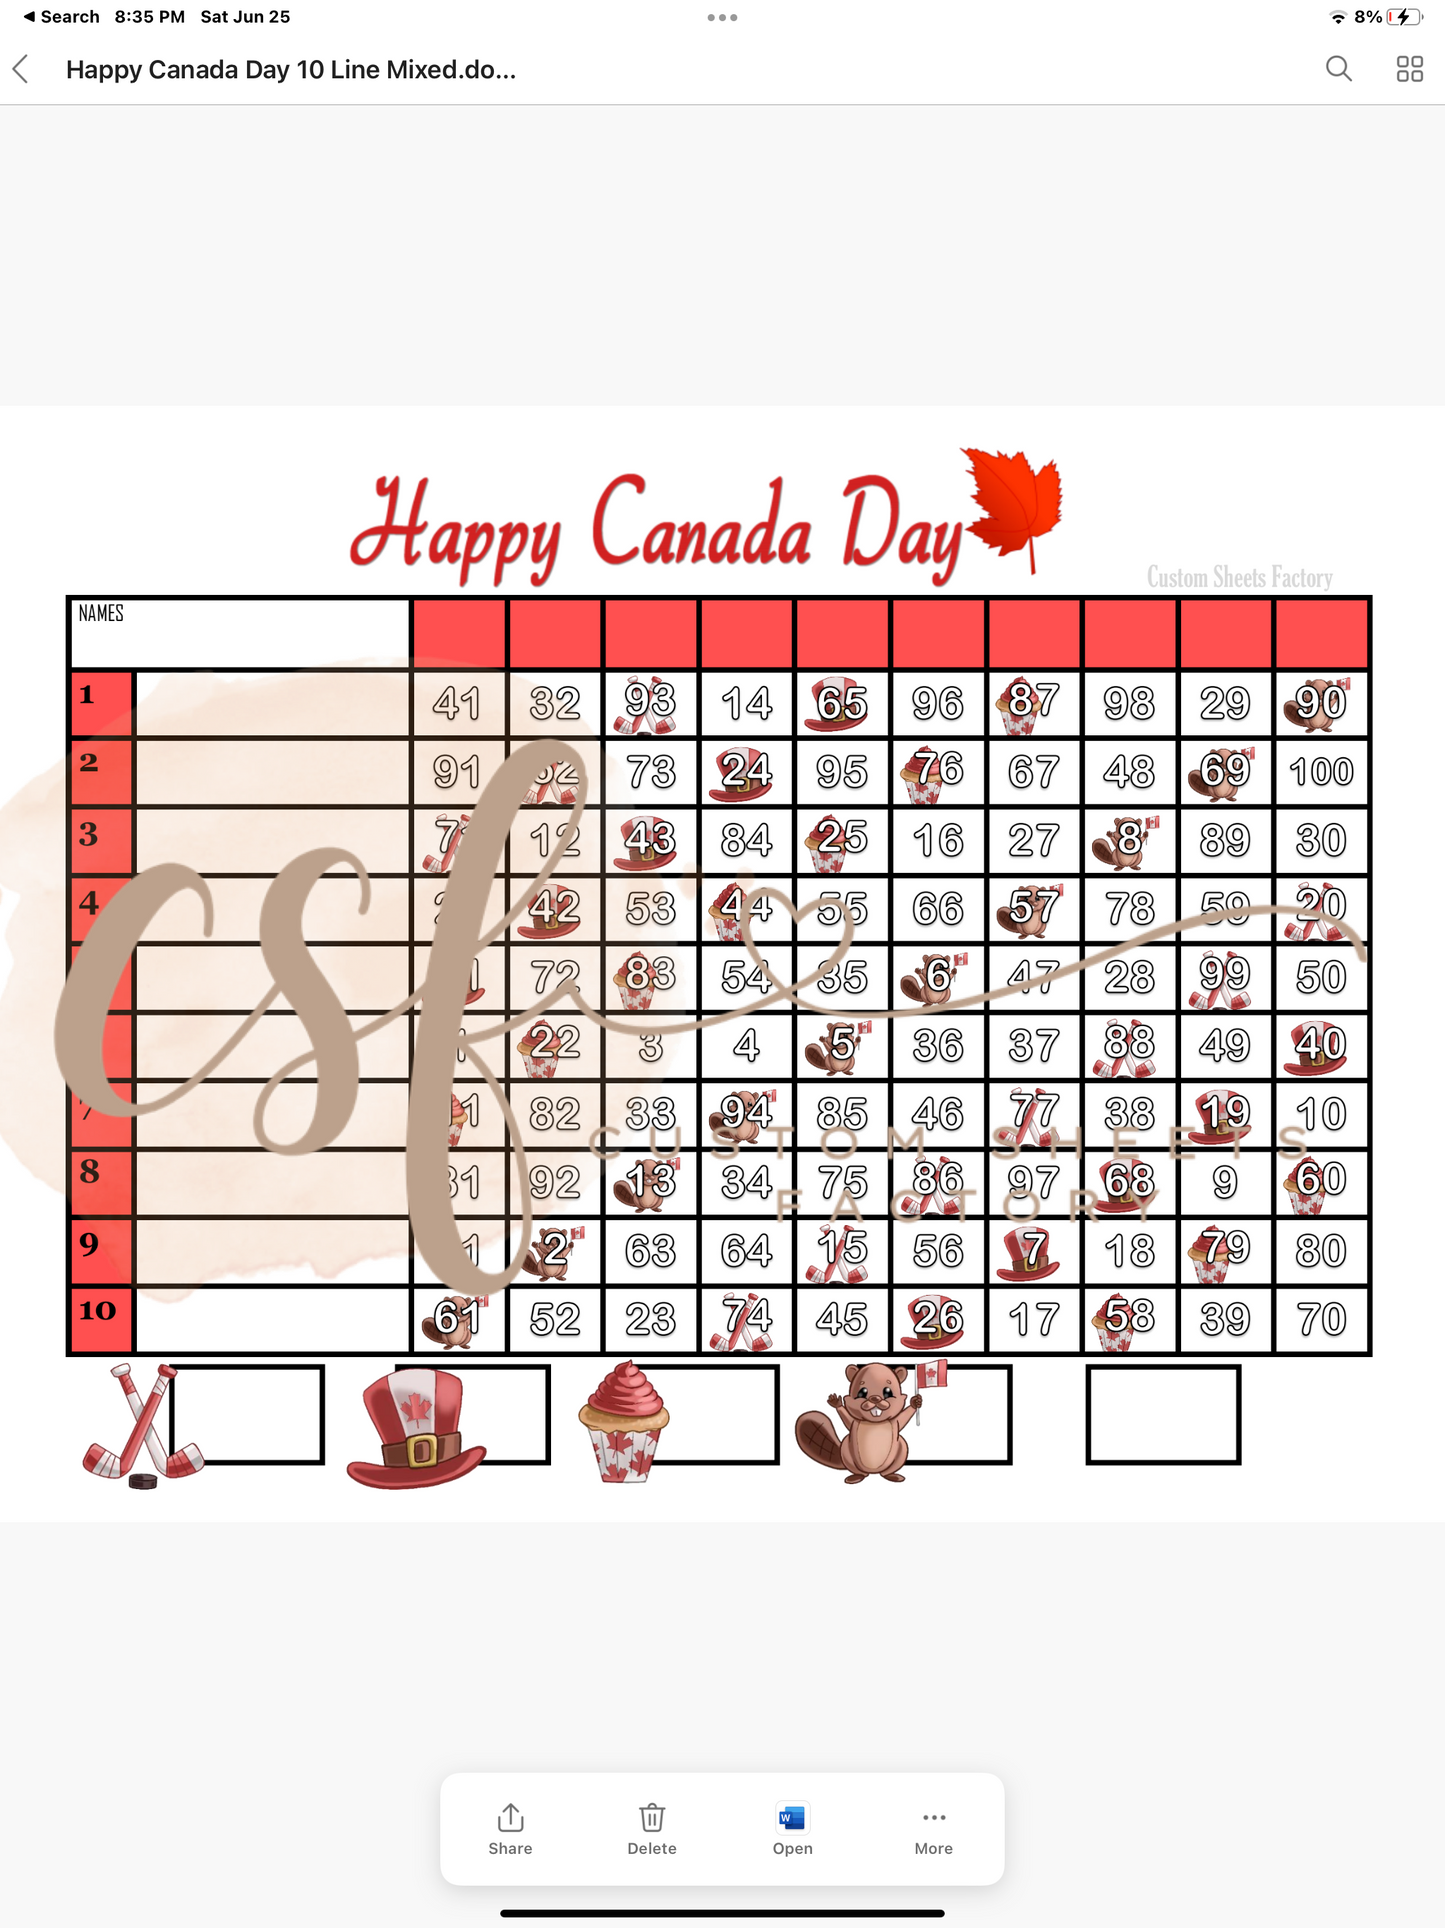 Happy Canada Day - 10 line - 100 Ball